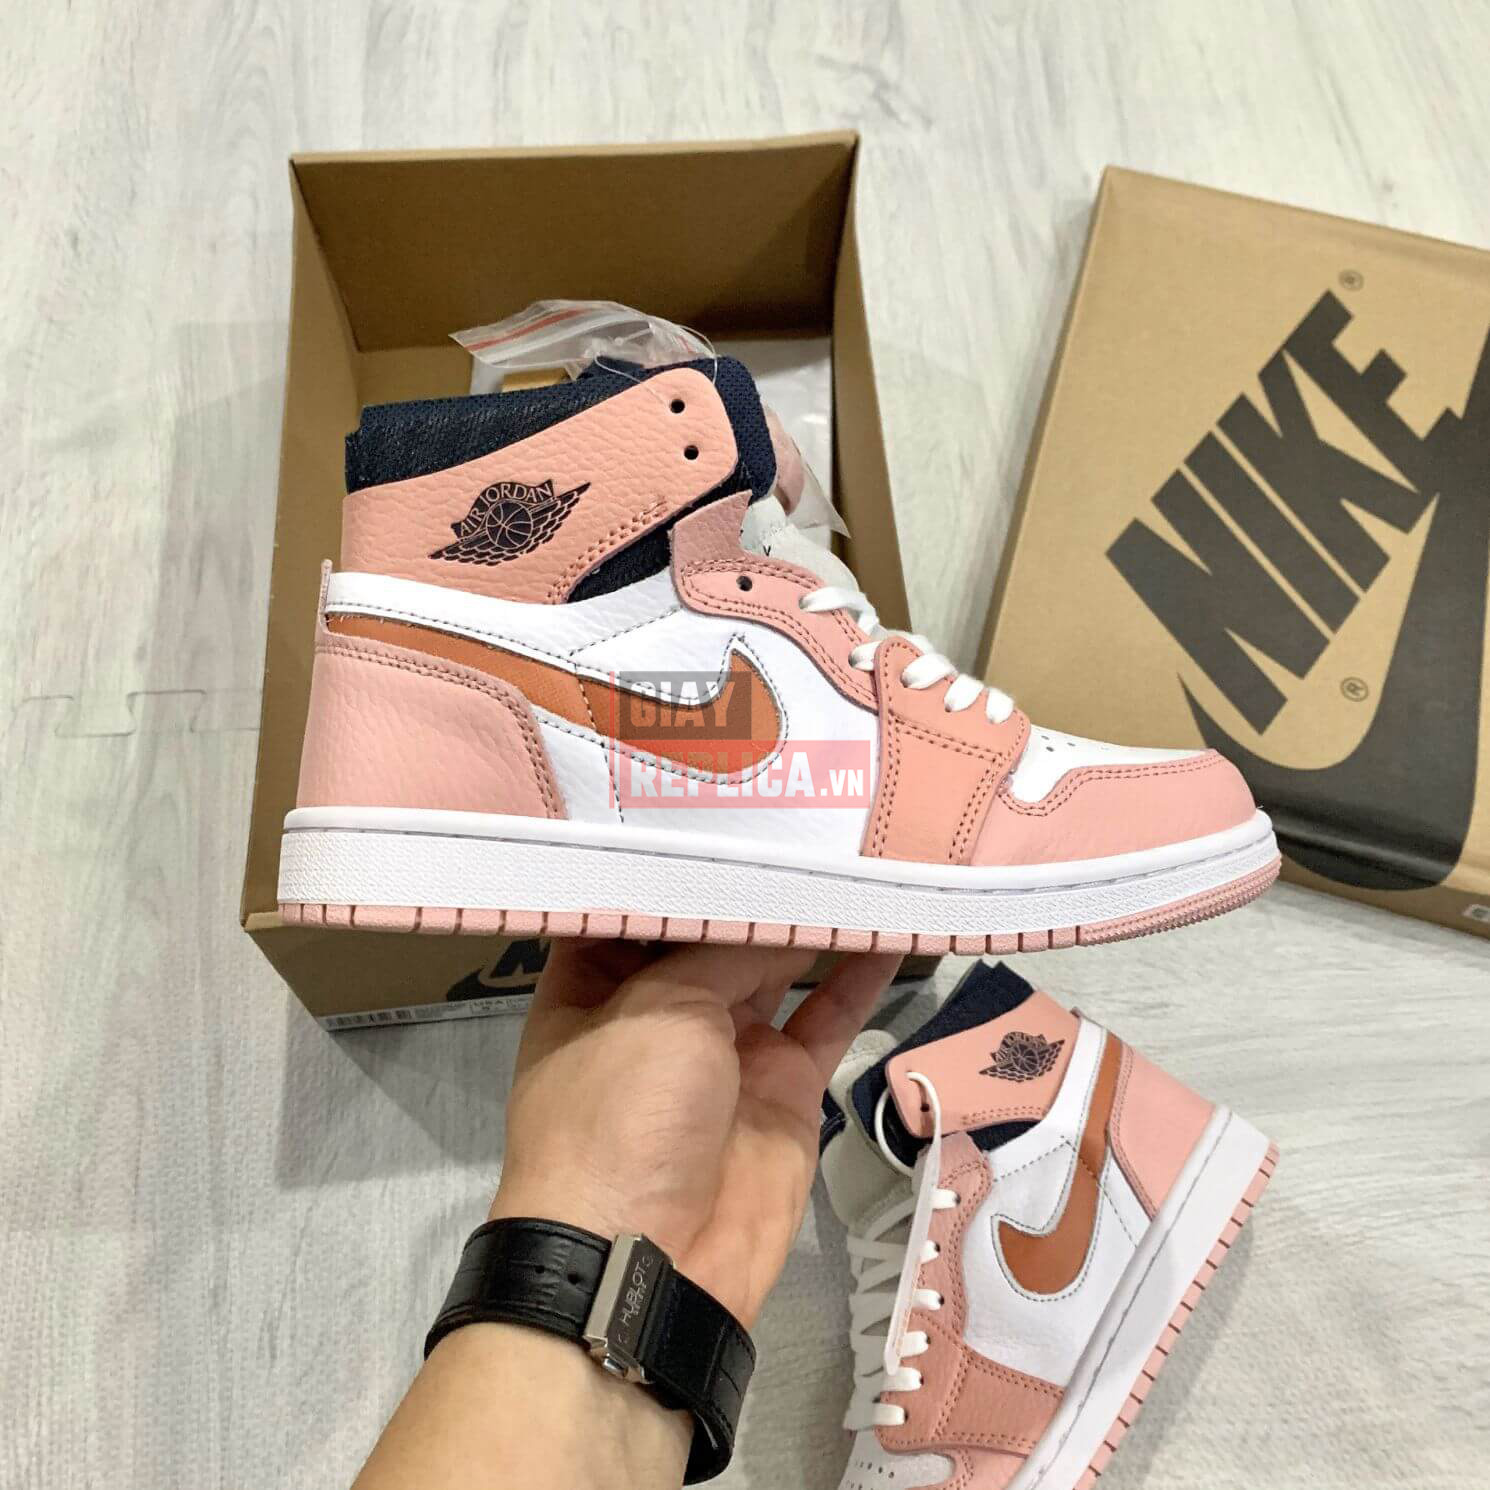 Giày Nike Air Jordan 1 High Zoom Air CMFT Pink Glaze